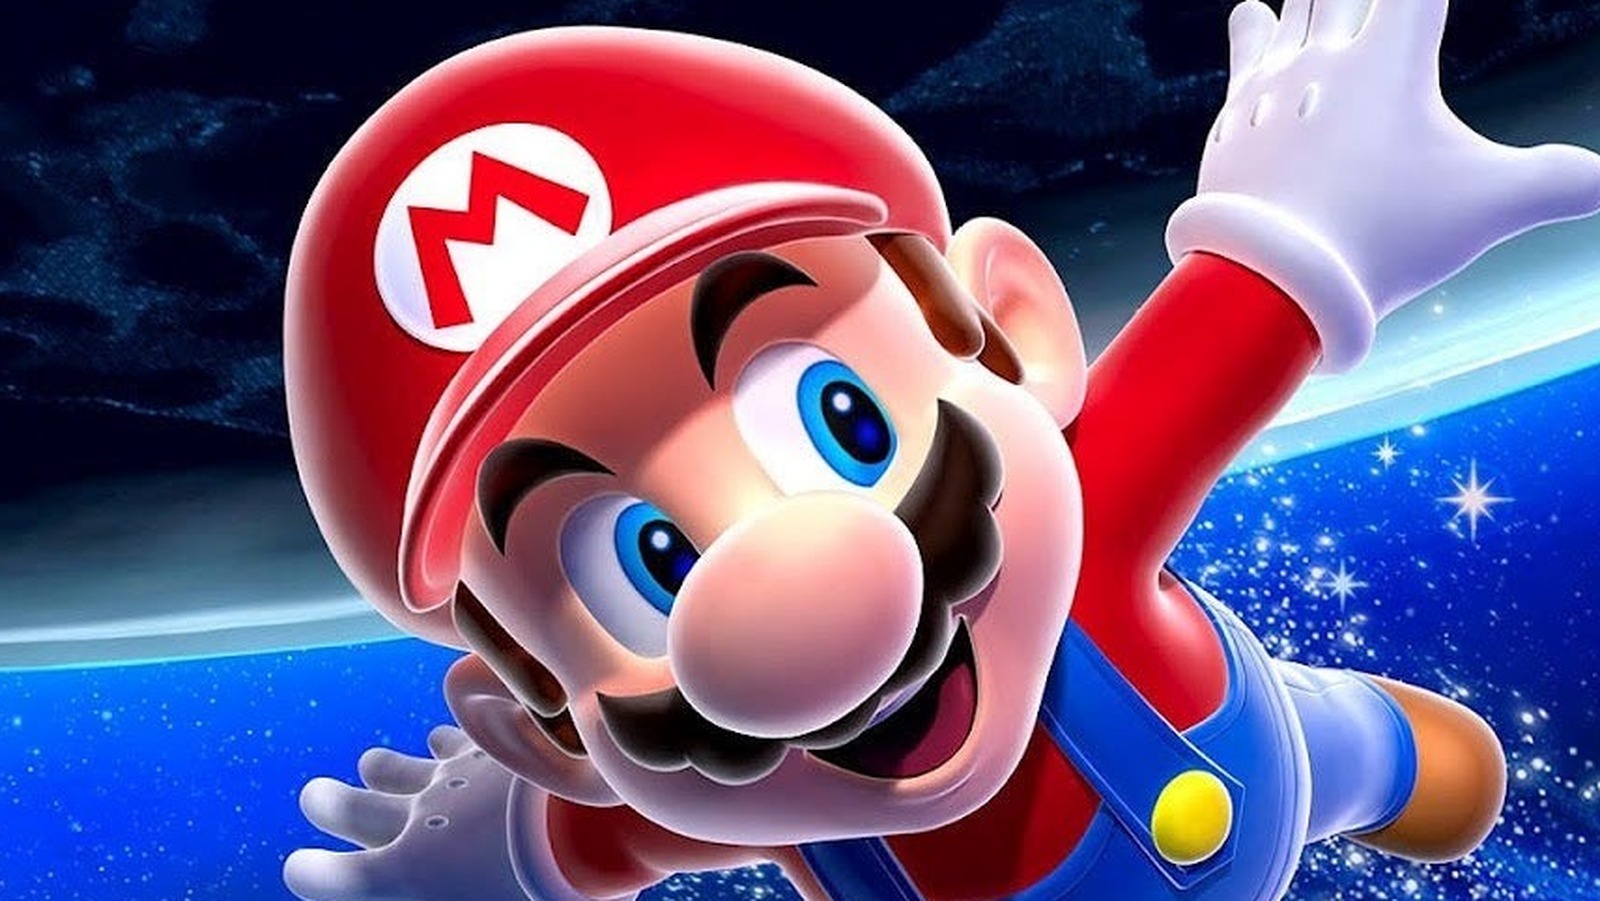 Every Kingdom In Super Mario Odyssey [SPOILERS] - GameSpot